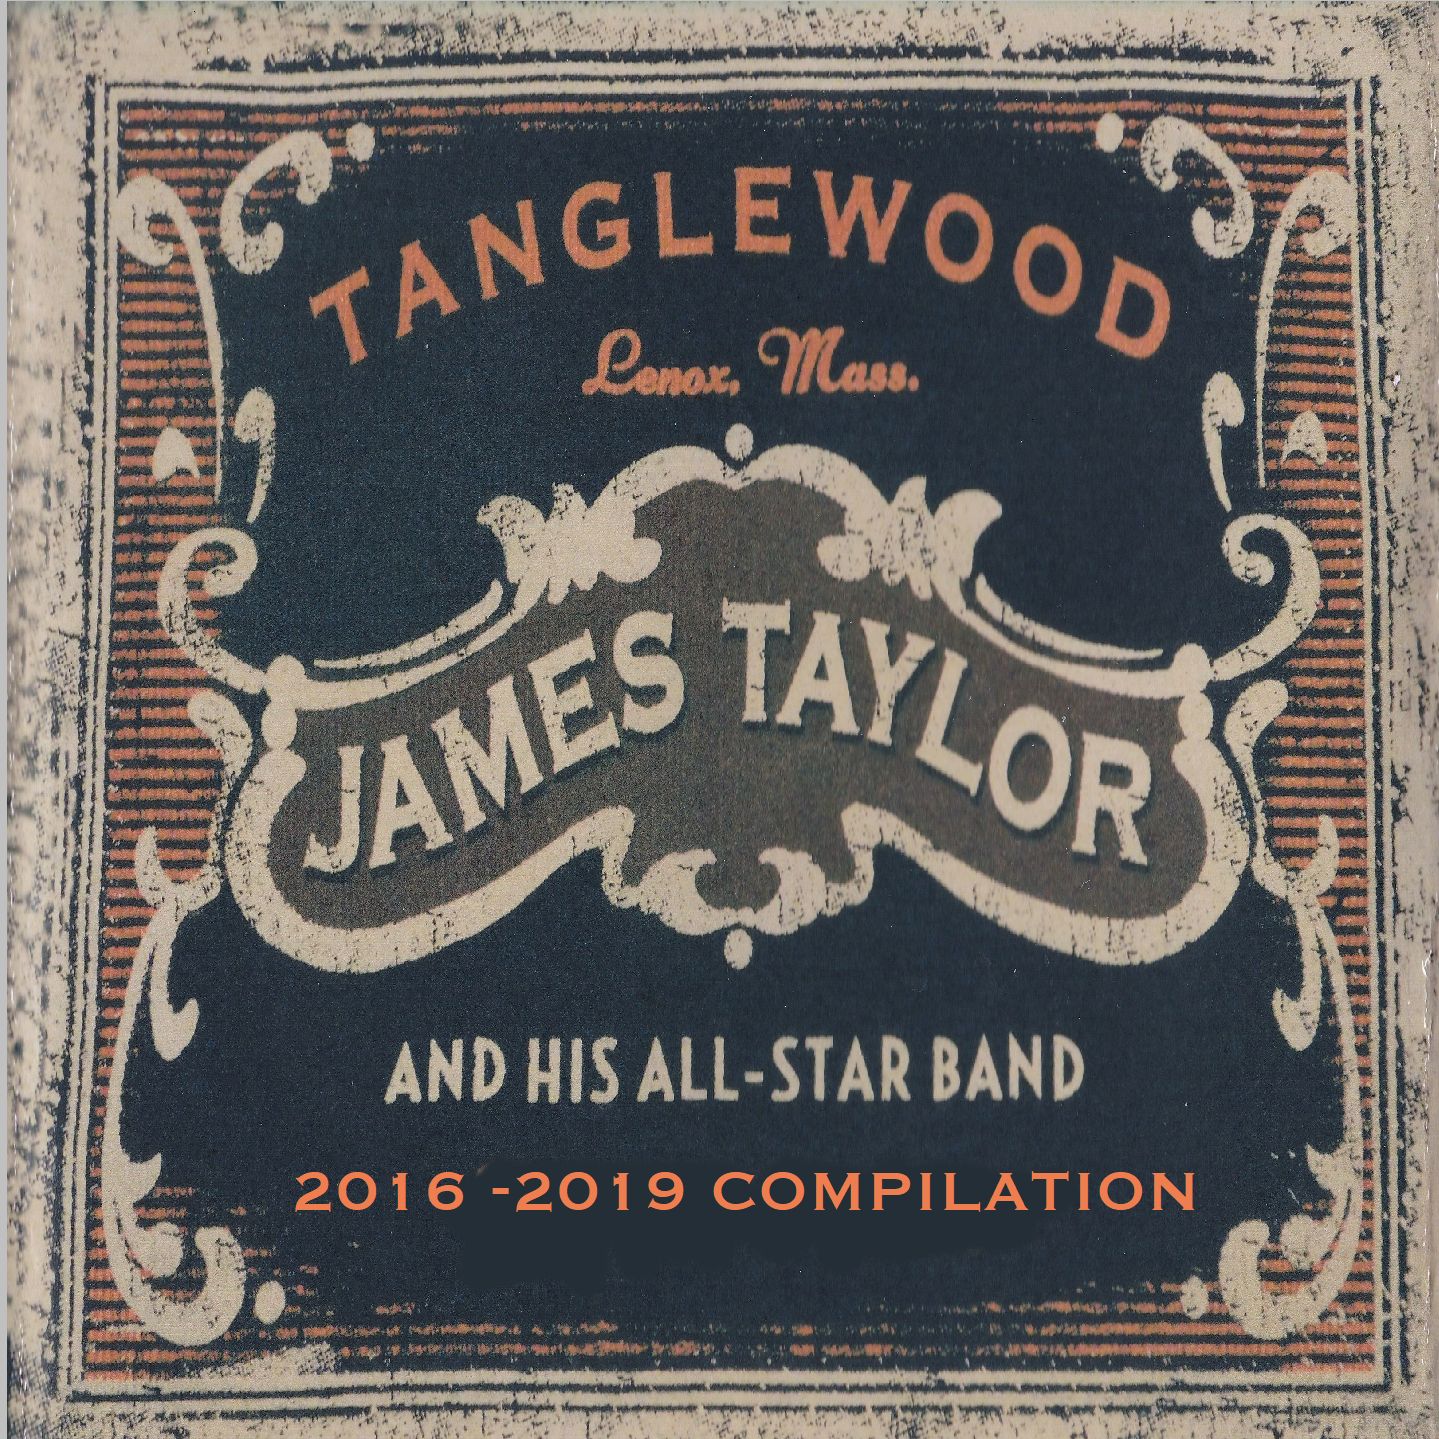 JamesTaylor2016-2019TanglewoodLennoxMA (2).jpg